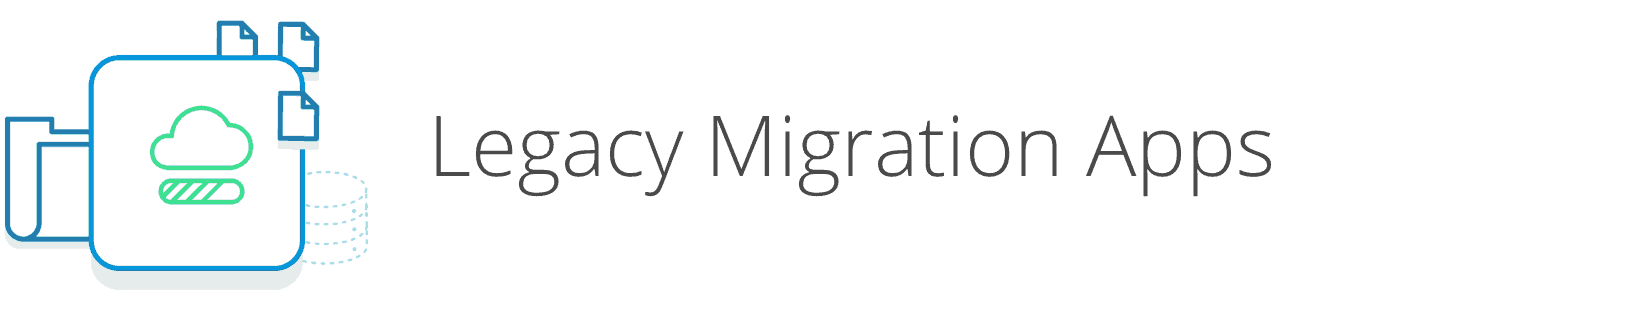 Legacy Migration Apps